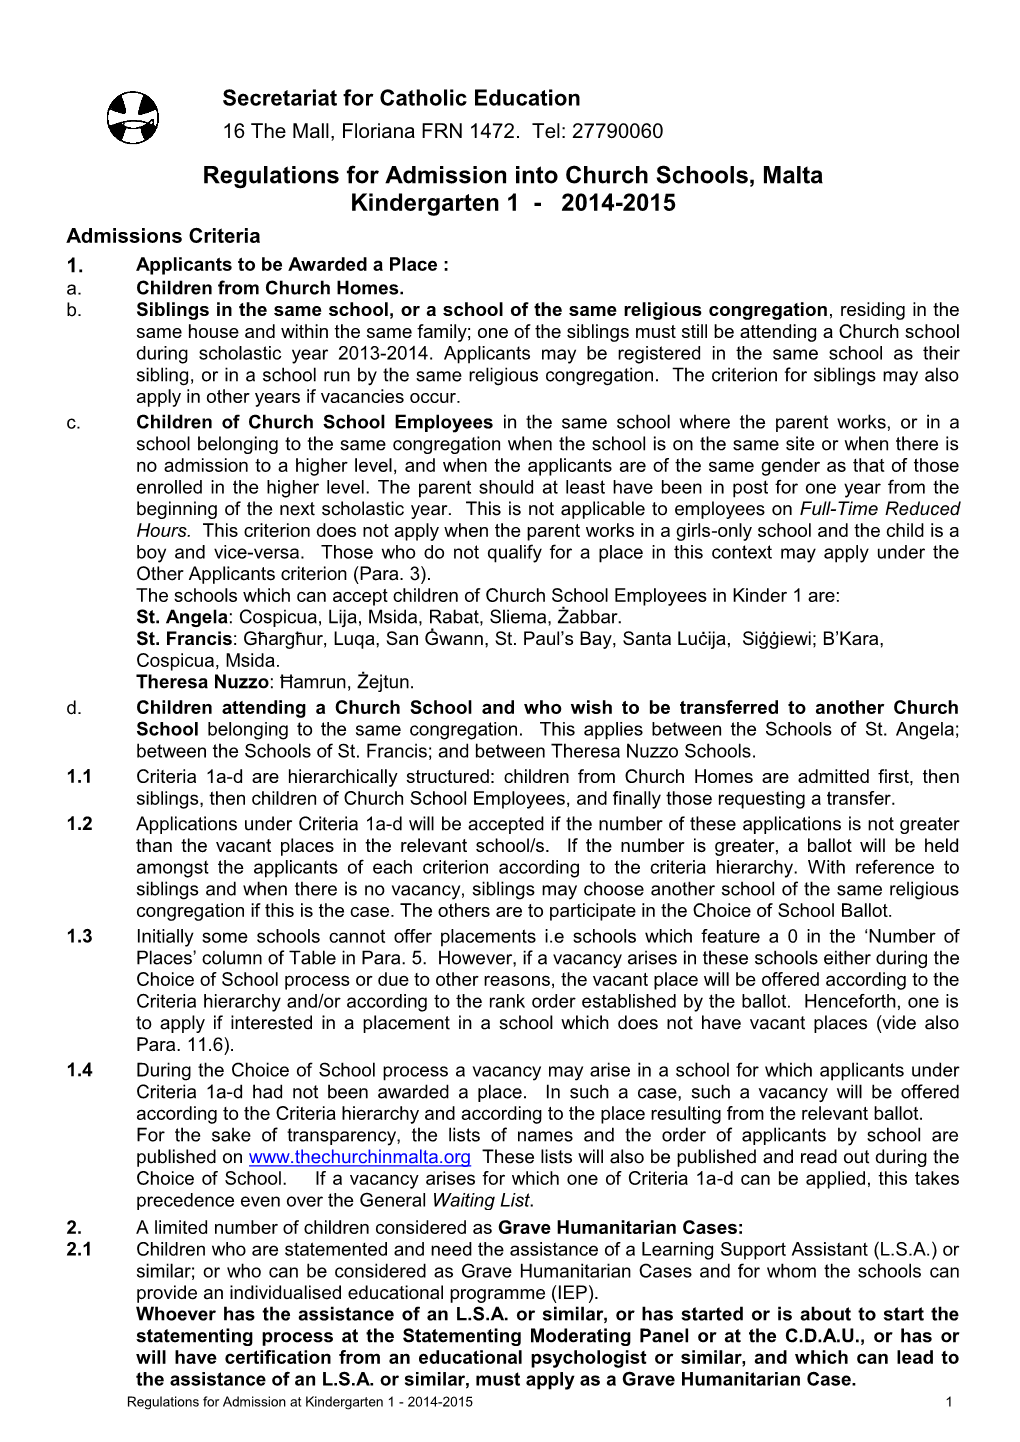 Regulations for Admission Into Church Schools, Malta Kindergarten 1 - 2014-2015